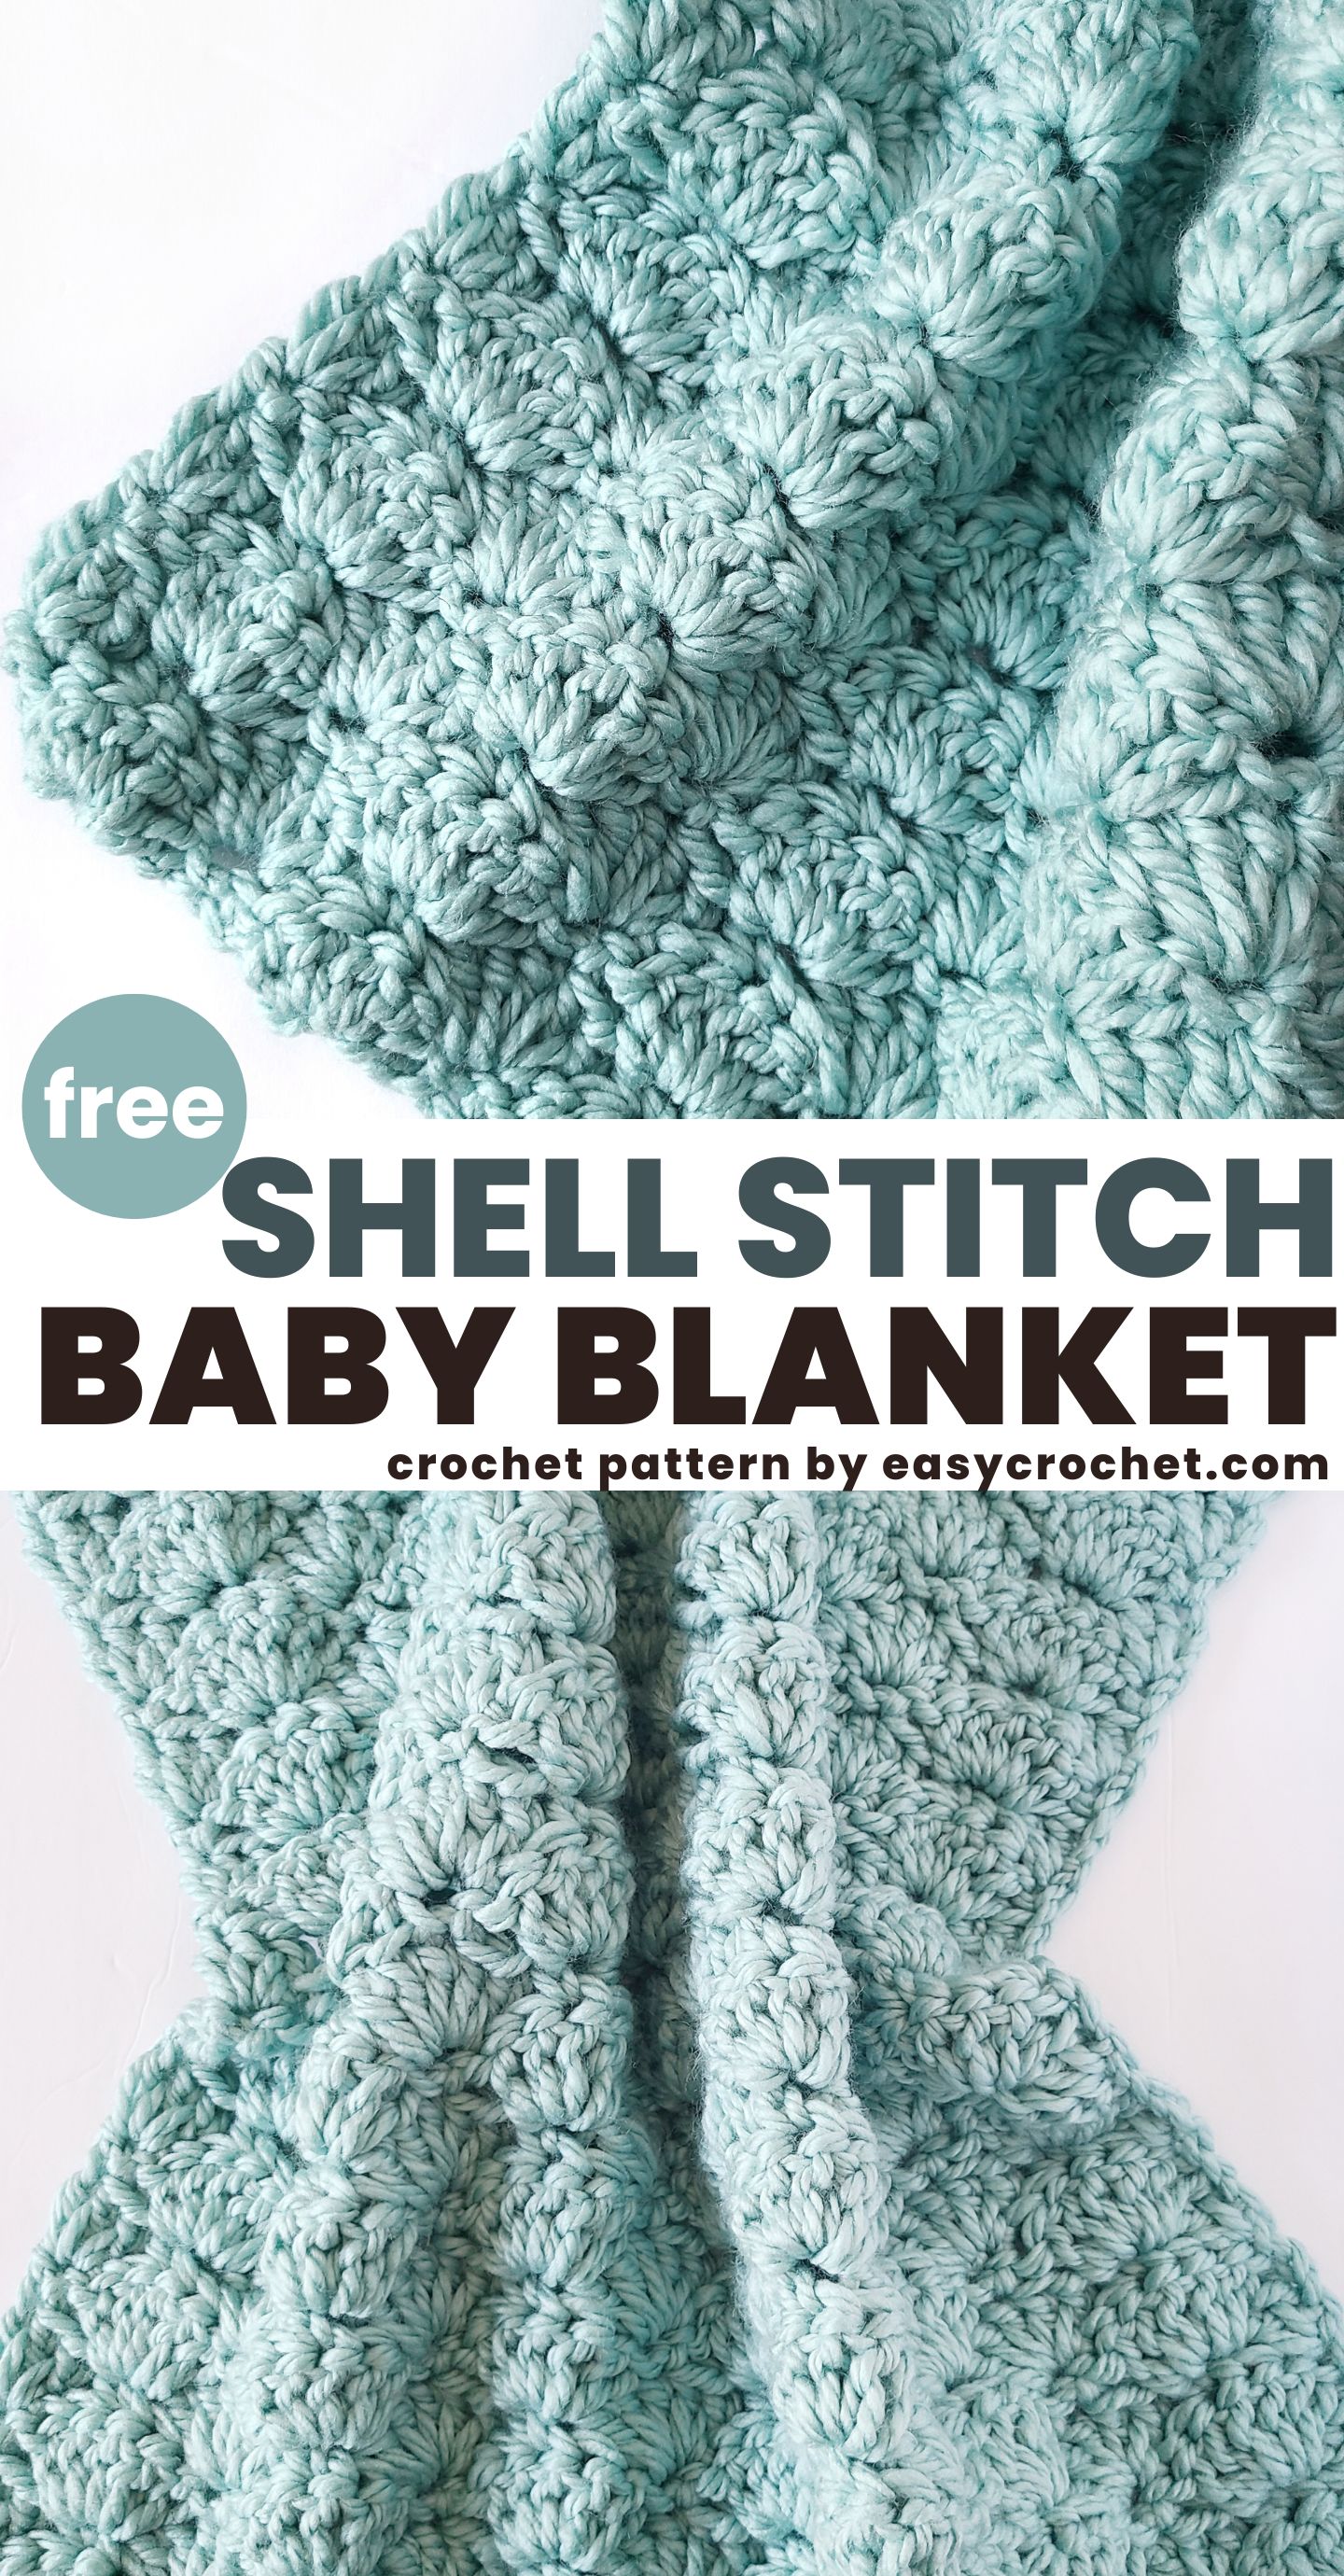 Crochet Yoga Mat Bag Free Patterns  Crochet patterns, Free crochet, Crochet  shell stitch